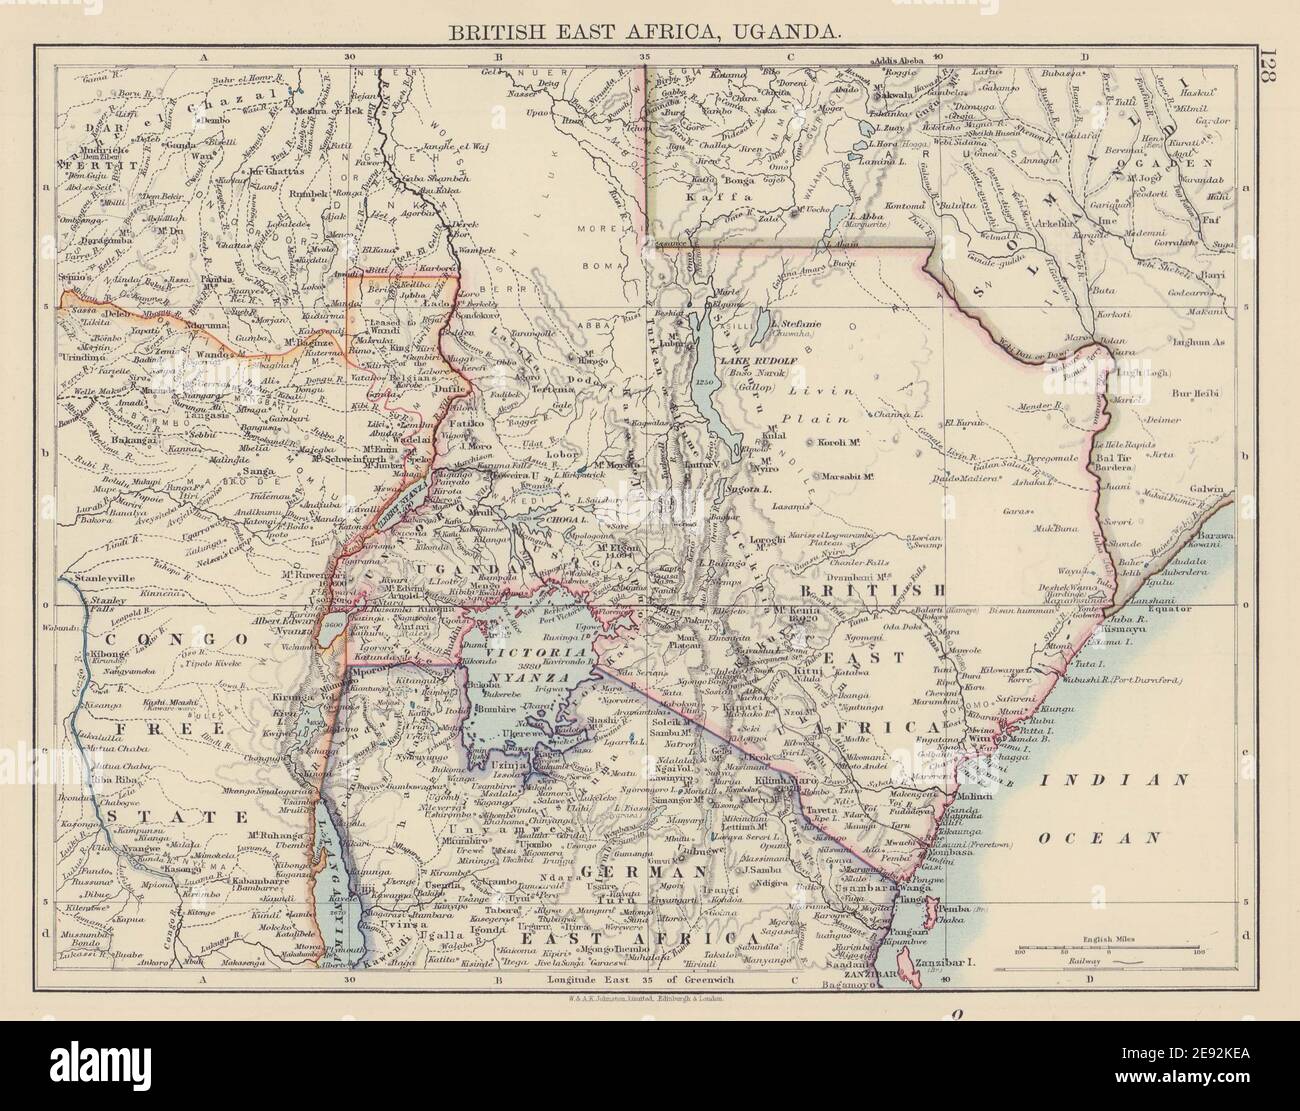 British East Africa Uganda Kenya Northern Tanzaniagerman Ea Rwanda 1901 Map 2E92KEA 